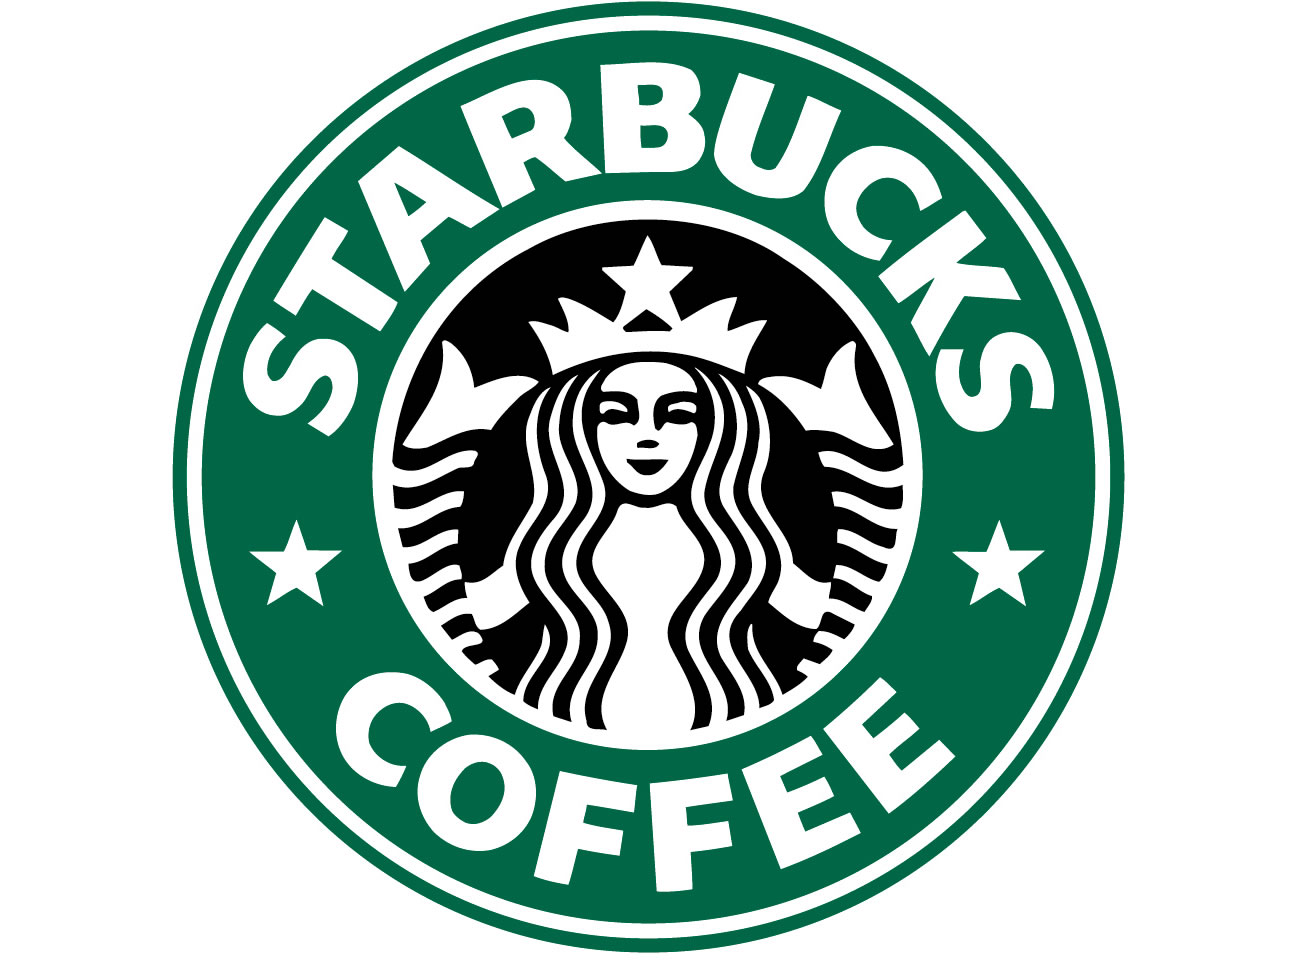 starbucks-coffee-logo.jpg